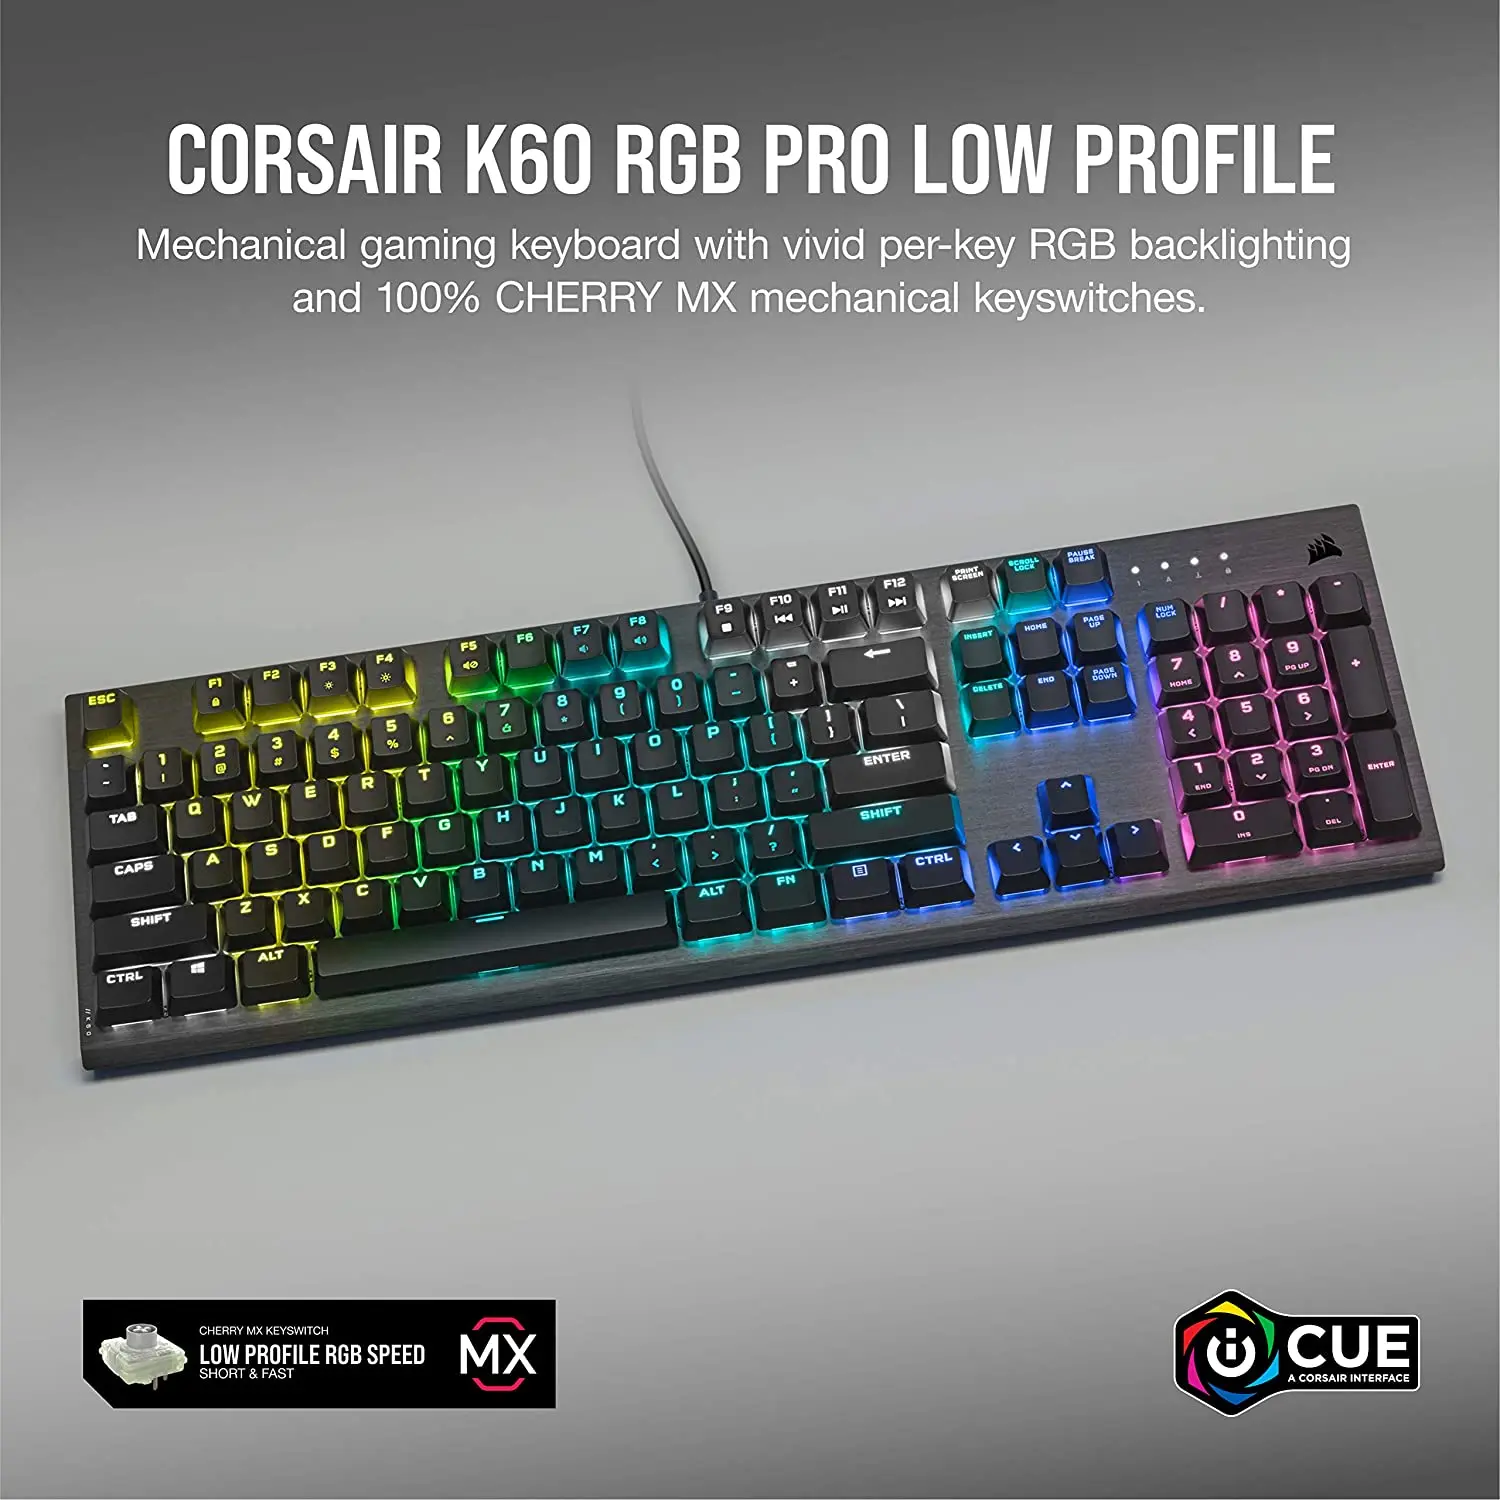 

Corsair K55 RGB Membrane Gaming Keyboard (6 Programmable Macro Keys, 3-Zone RGB Backlighting, multimedia Controls - Black pc